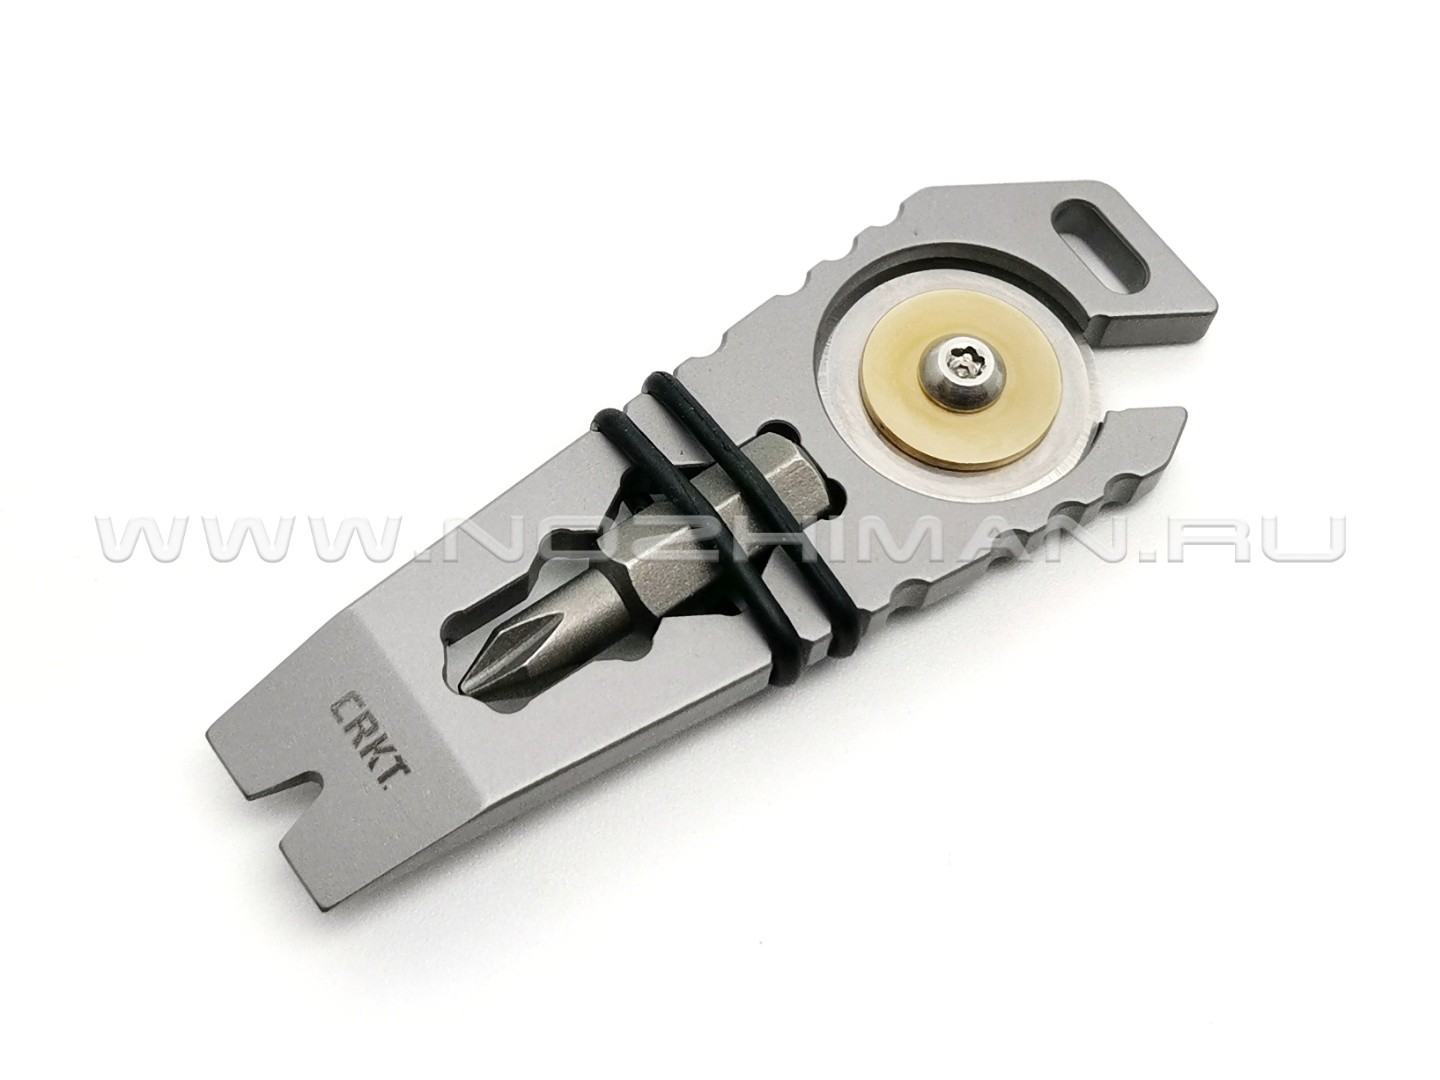 Инструмент CRKT Pry Cutter Keychain Tool 9913 Stainless steel (9 функций)